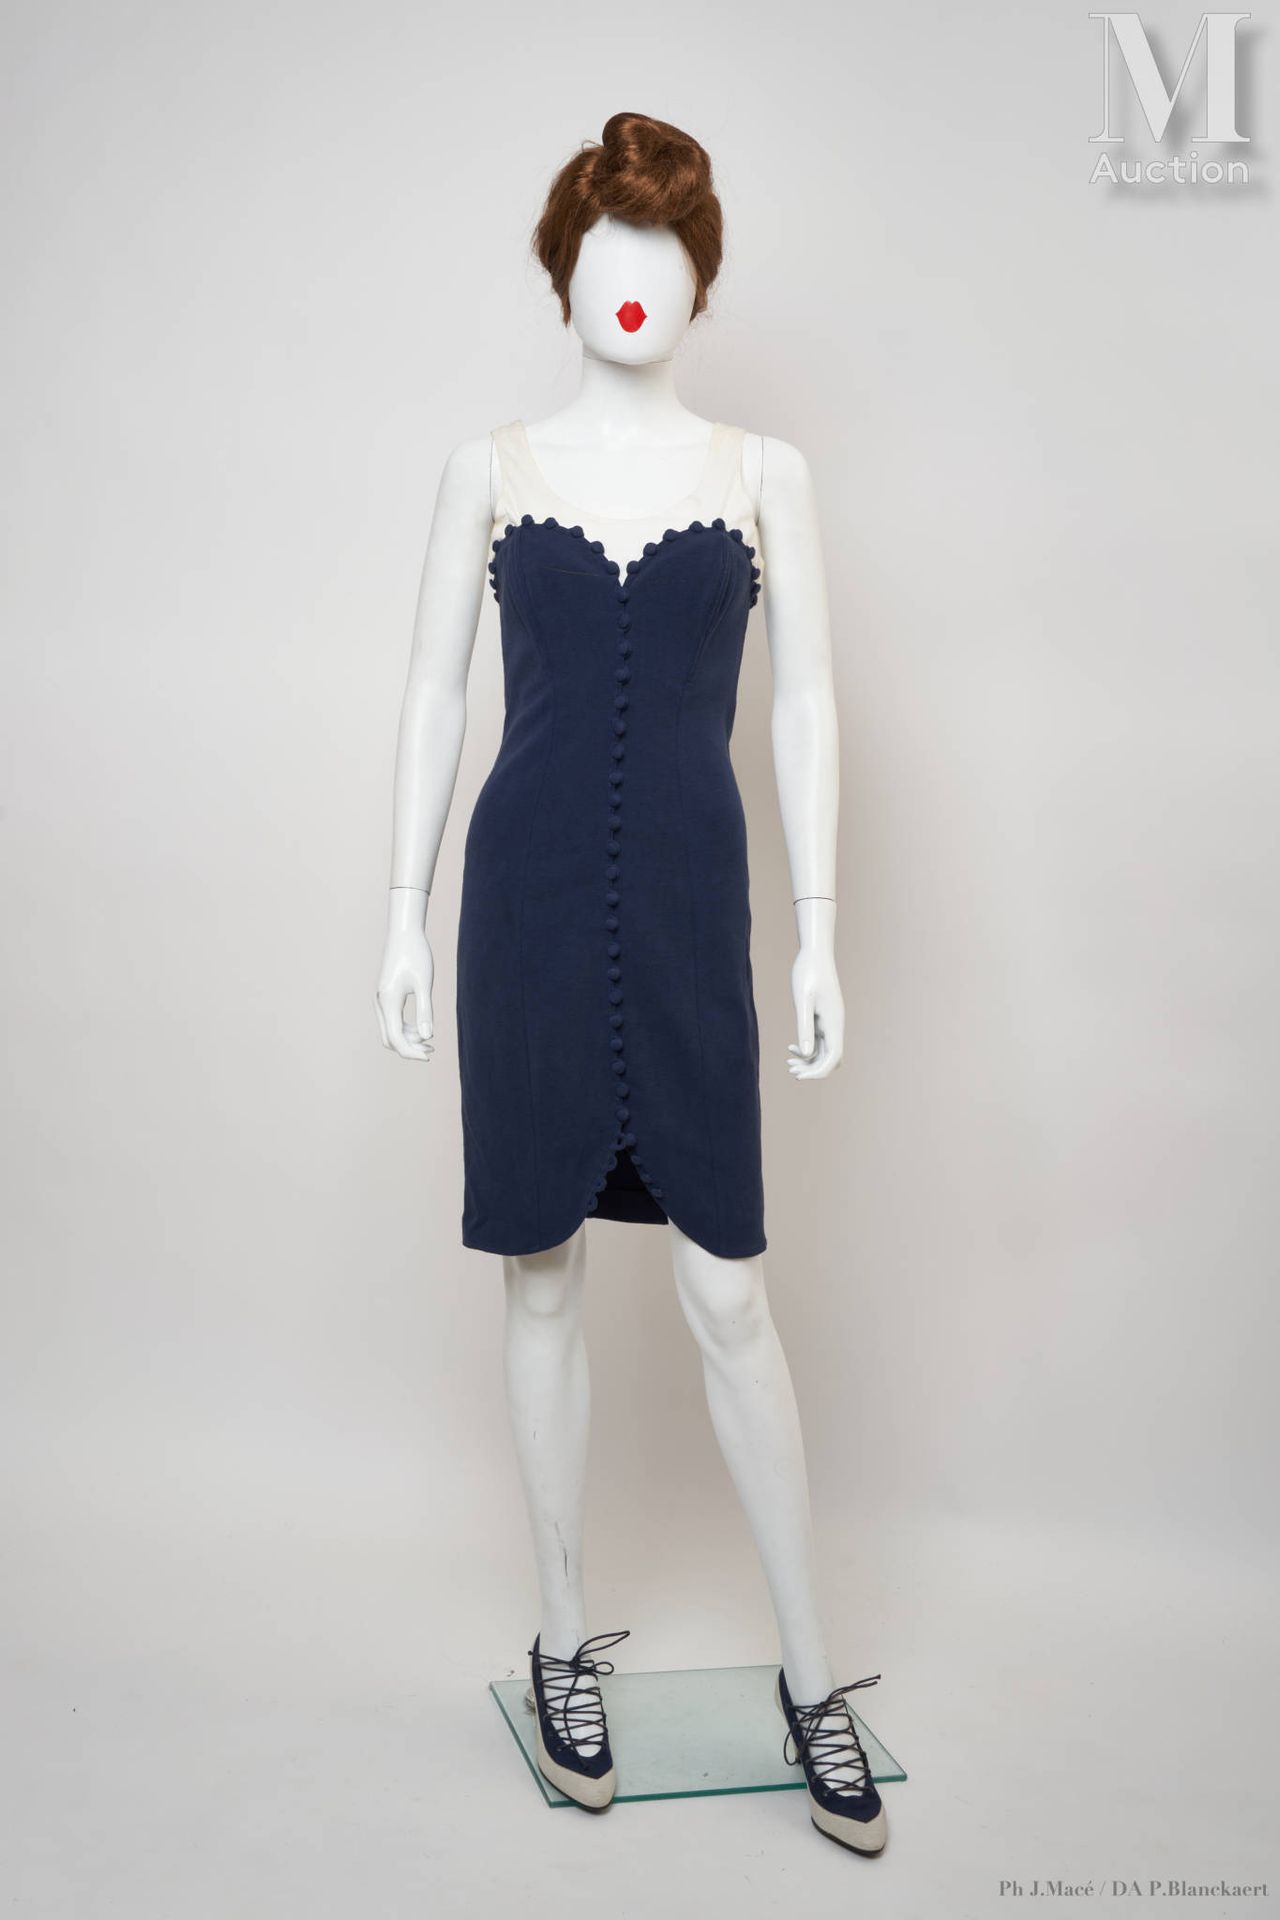 CHANTAL THOMASS - Printemps-été 1989 Vestido
de algodón elástico azul marino sob&hellip;